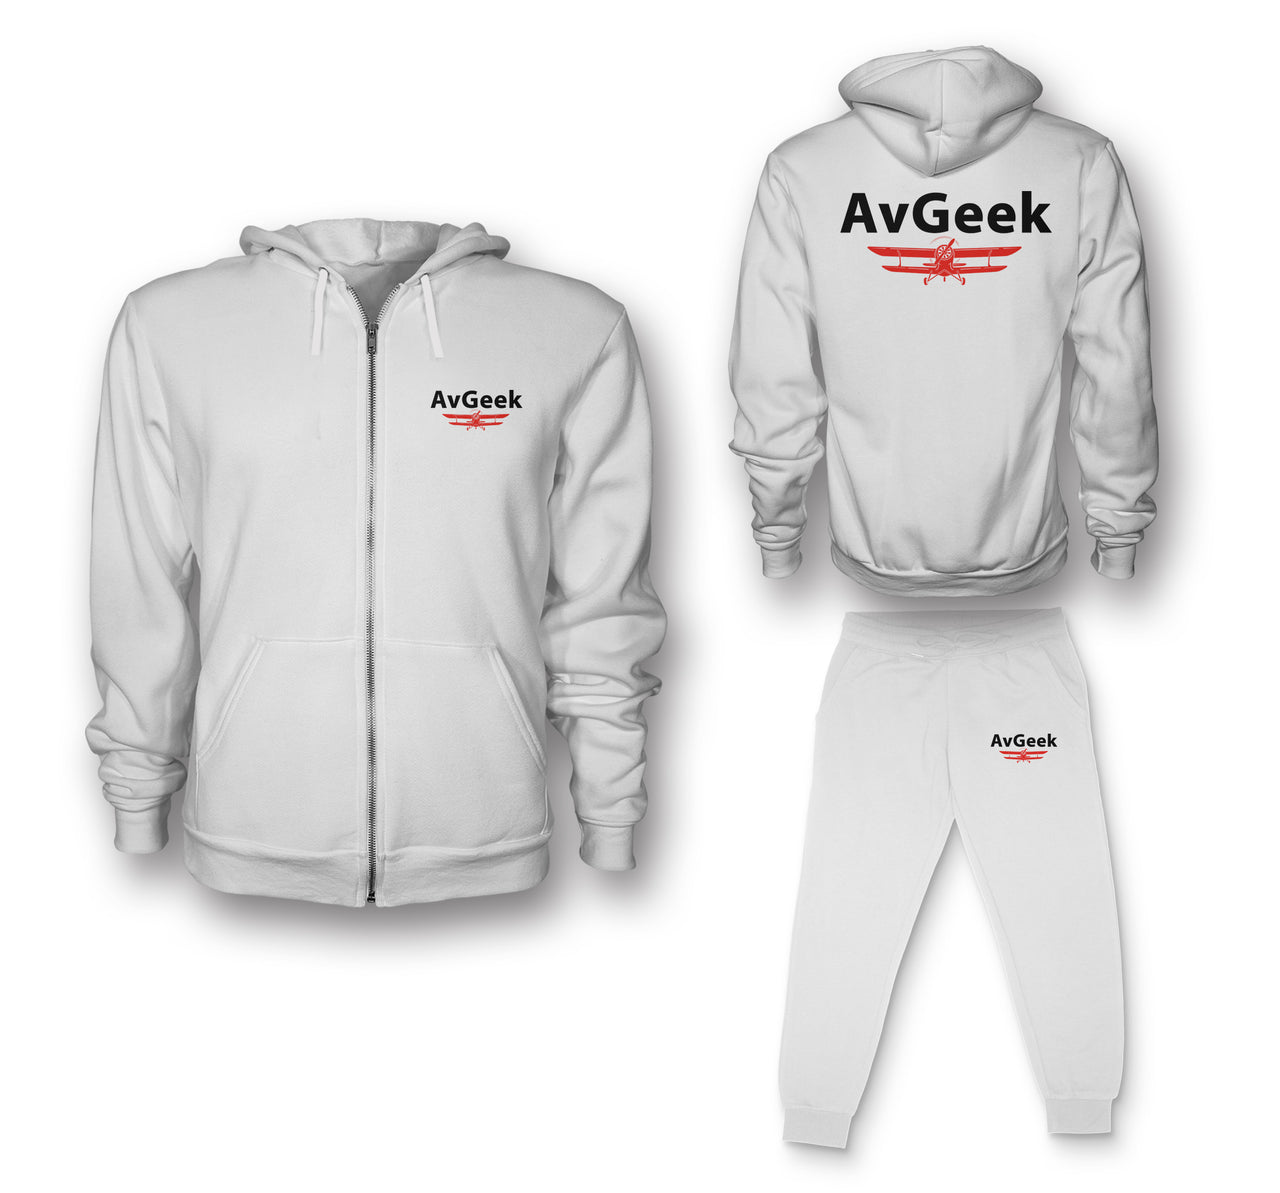 Avgeek Designed Zipped Hoodies & Sweatpants Set